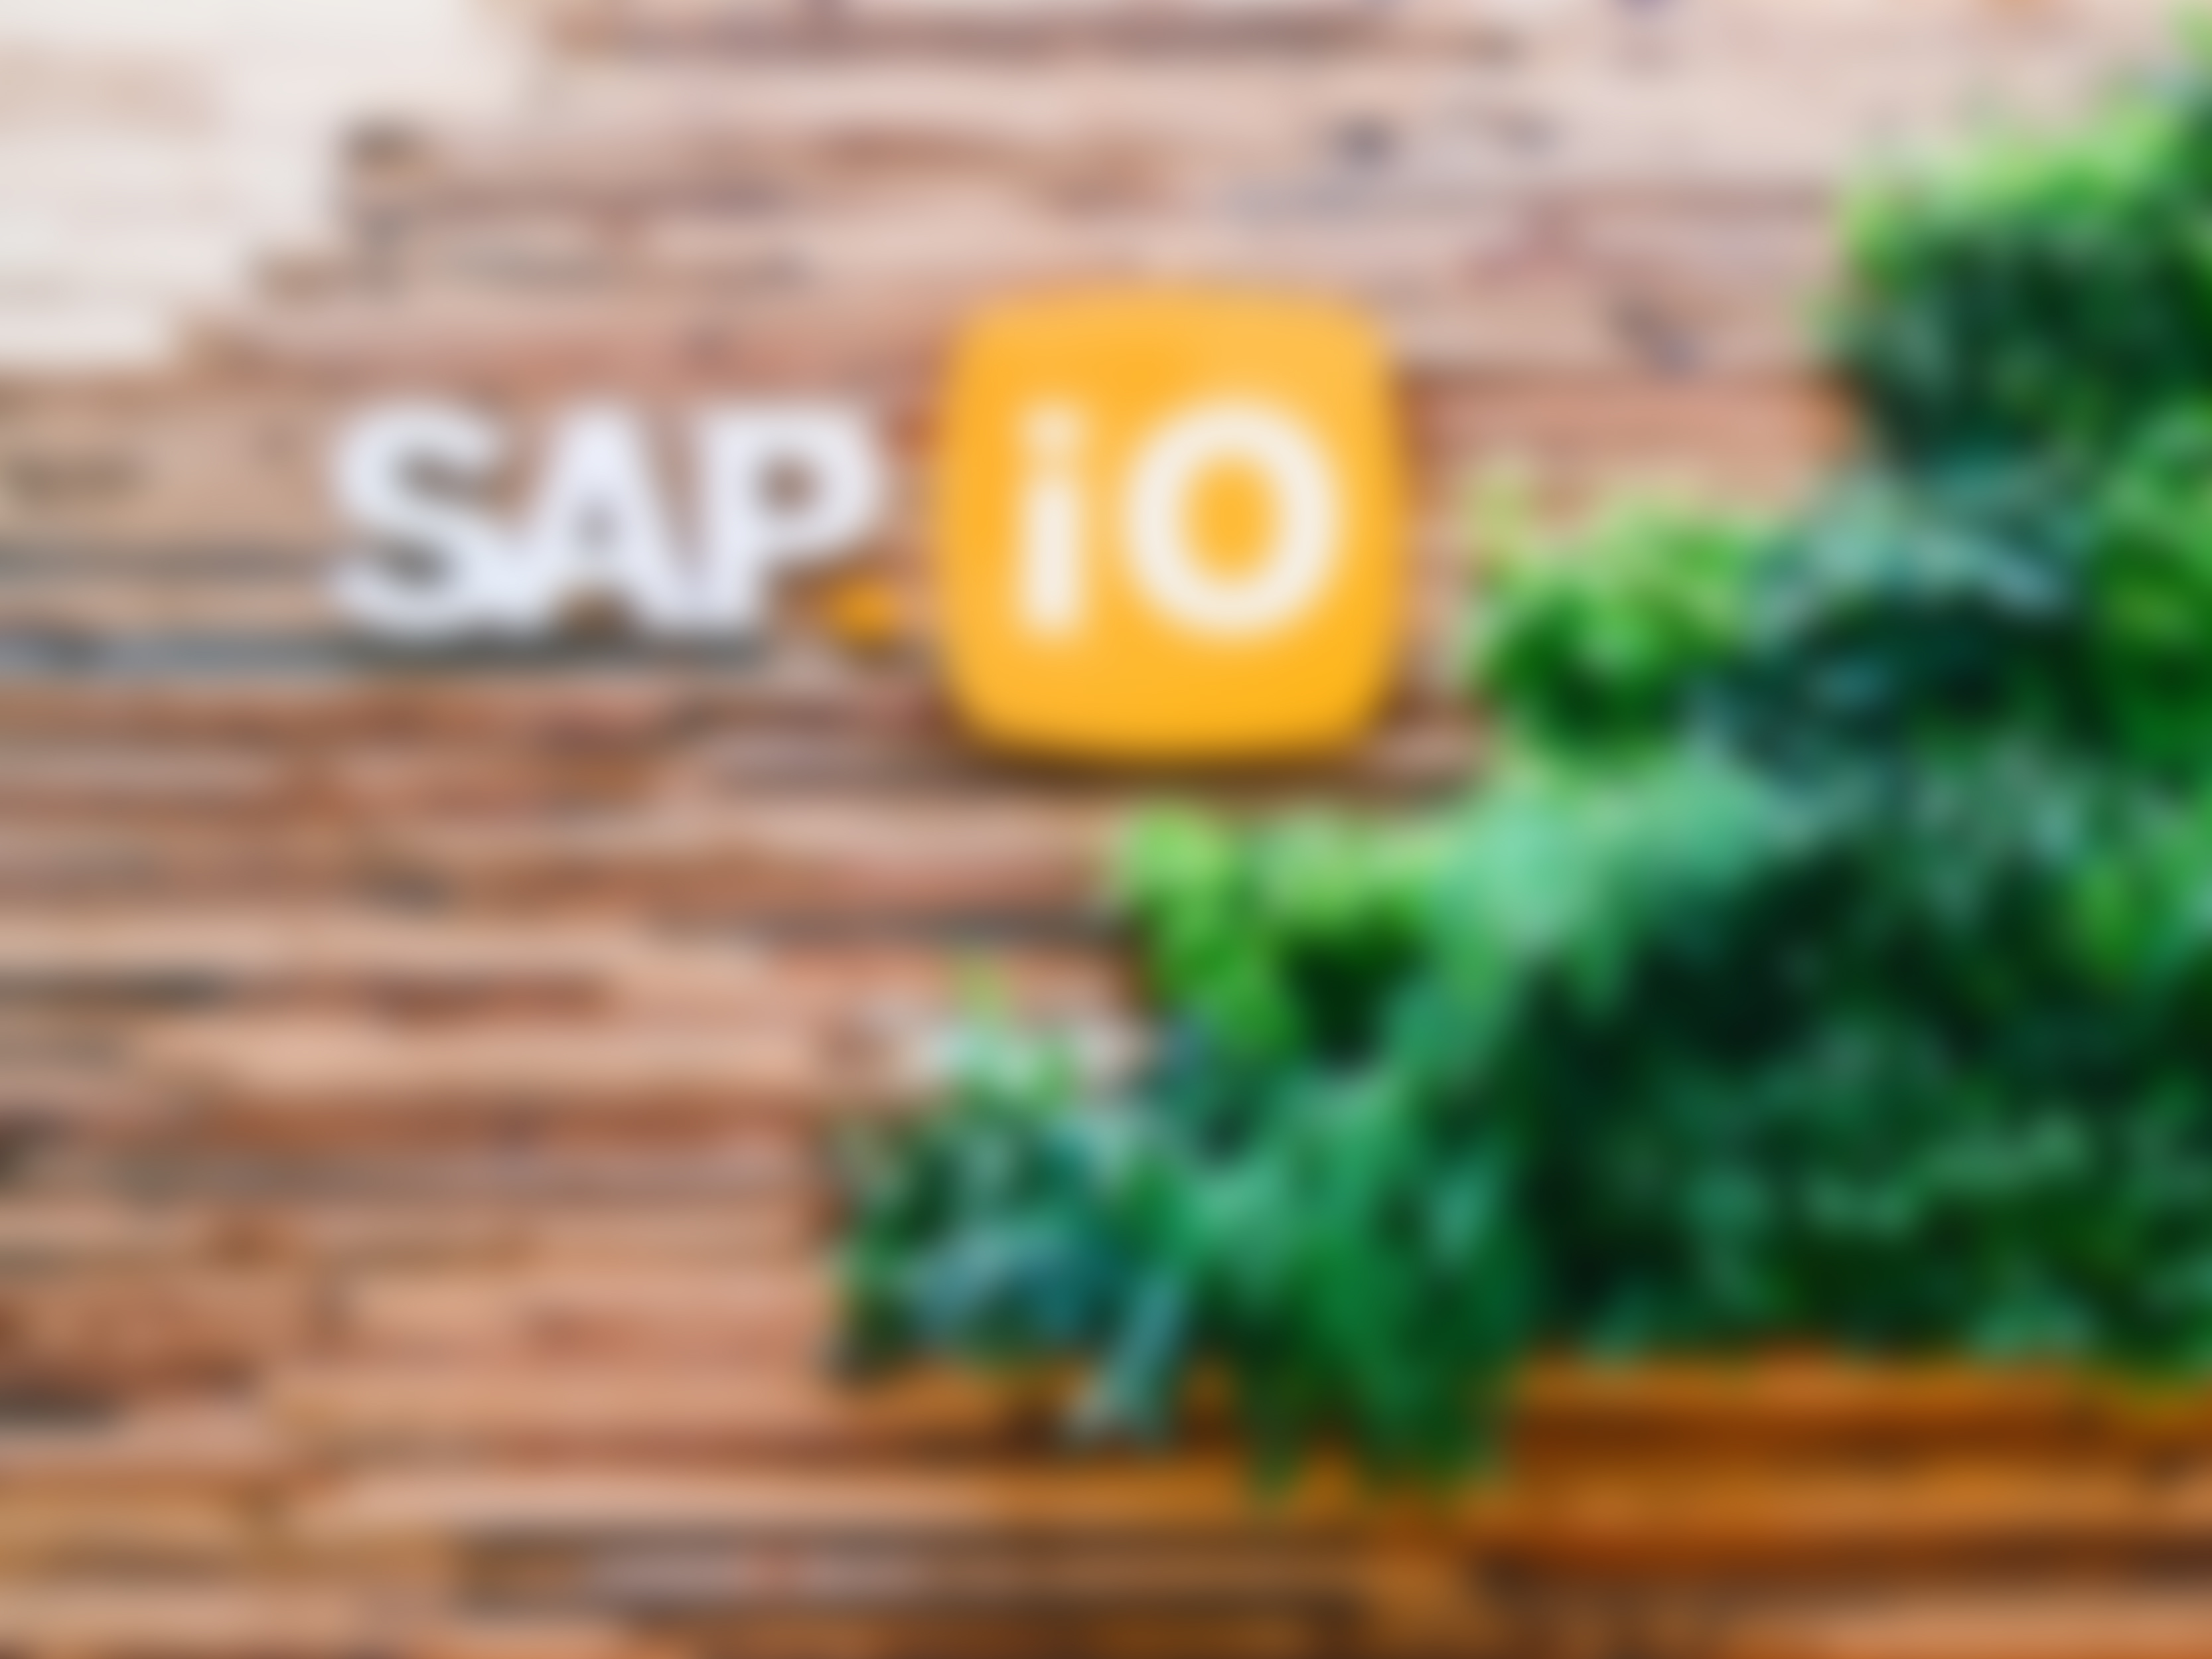 SAP.iO: Two Years, Three Key Learnings